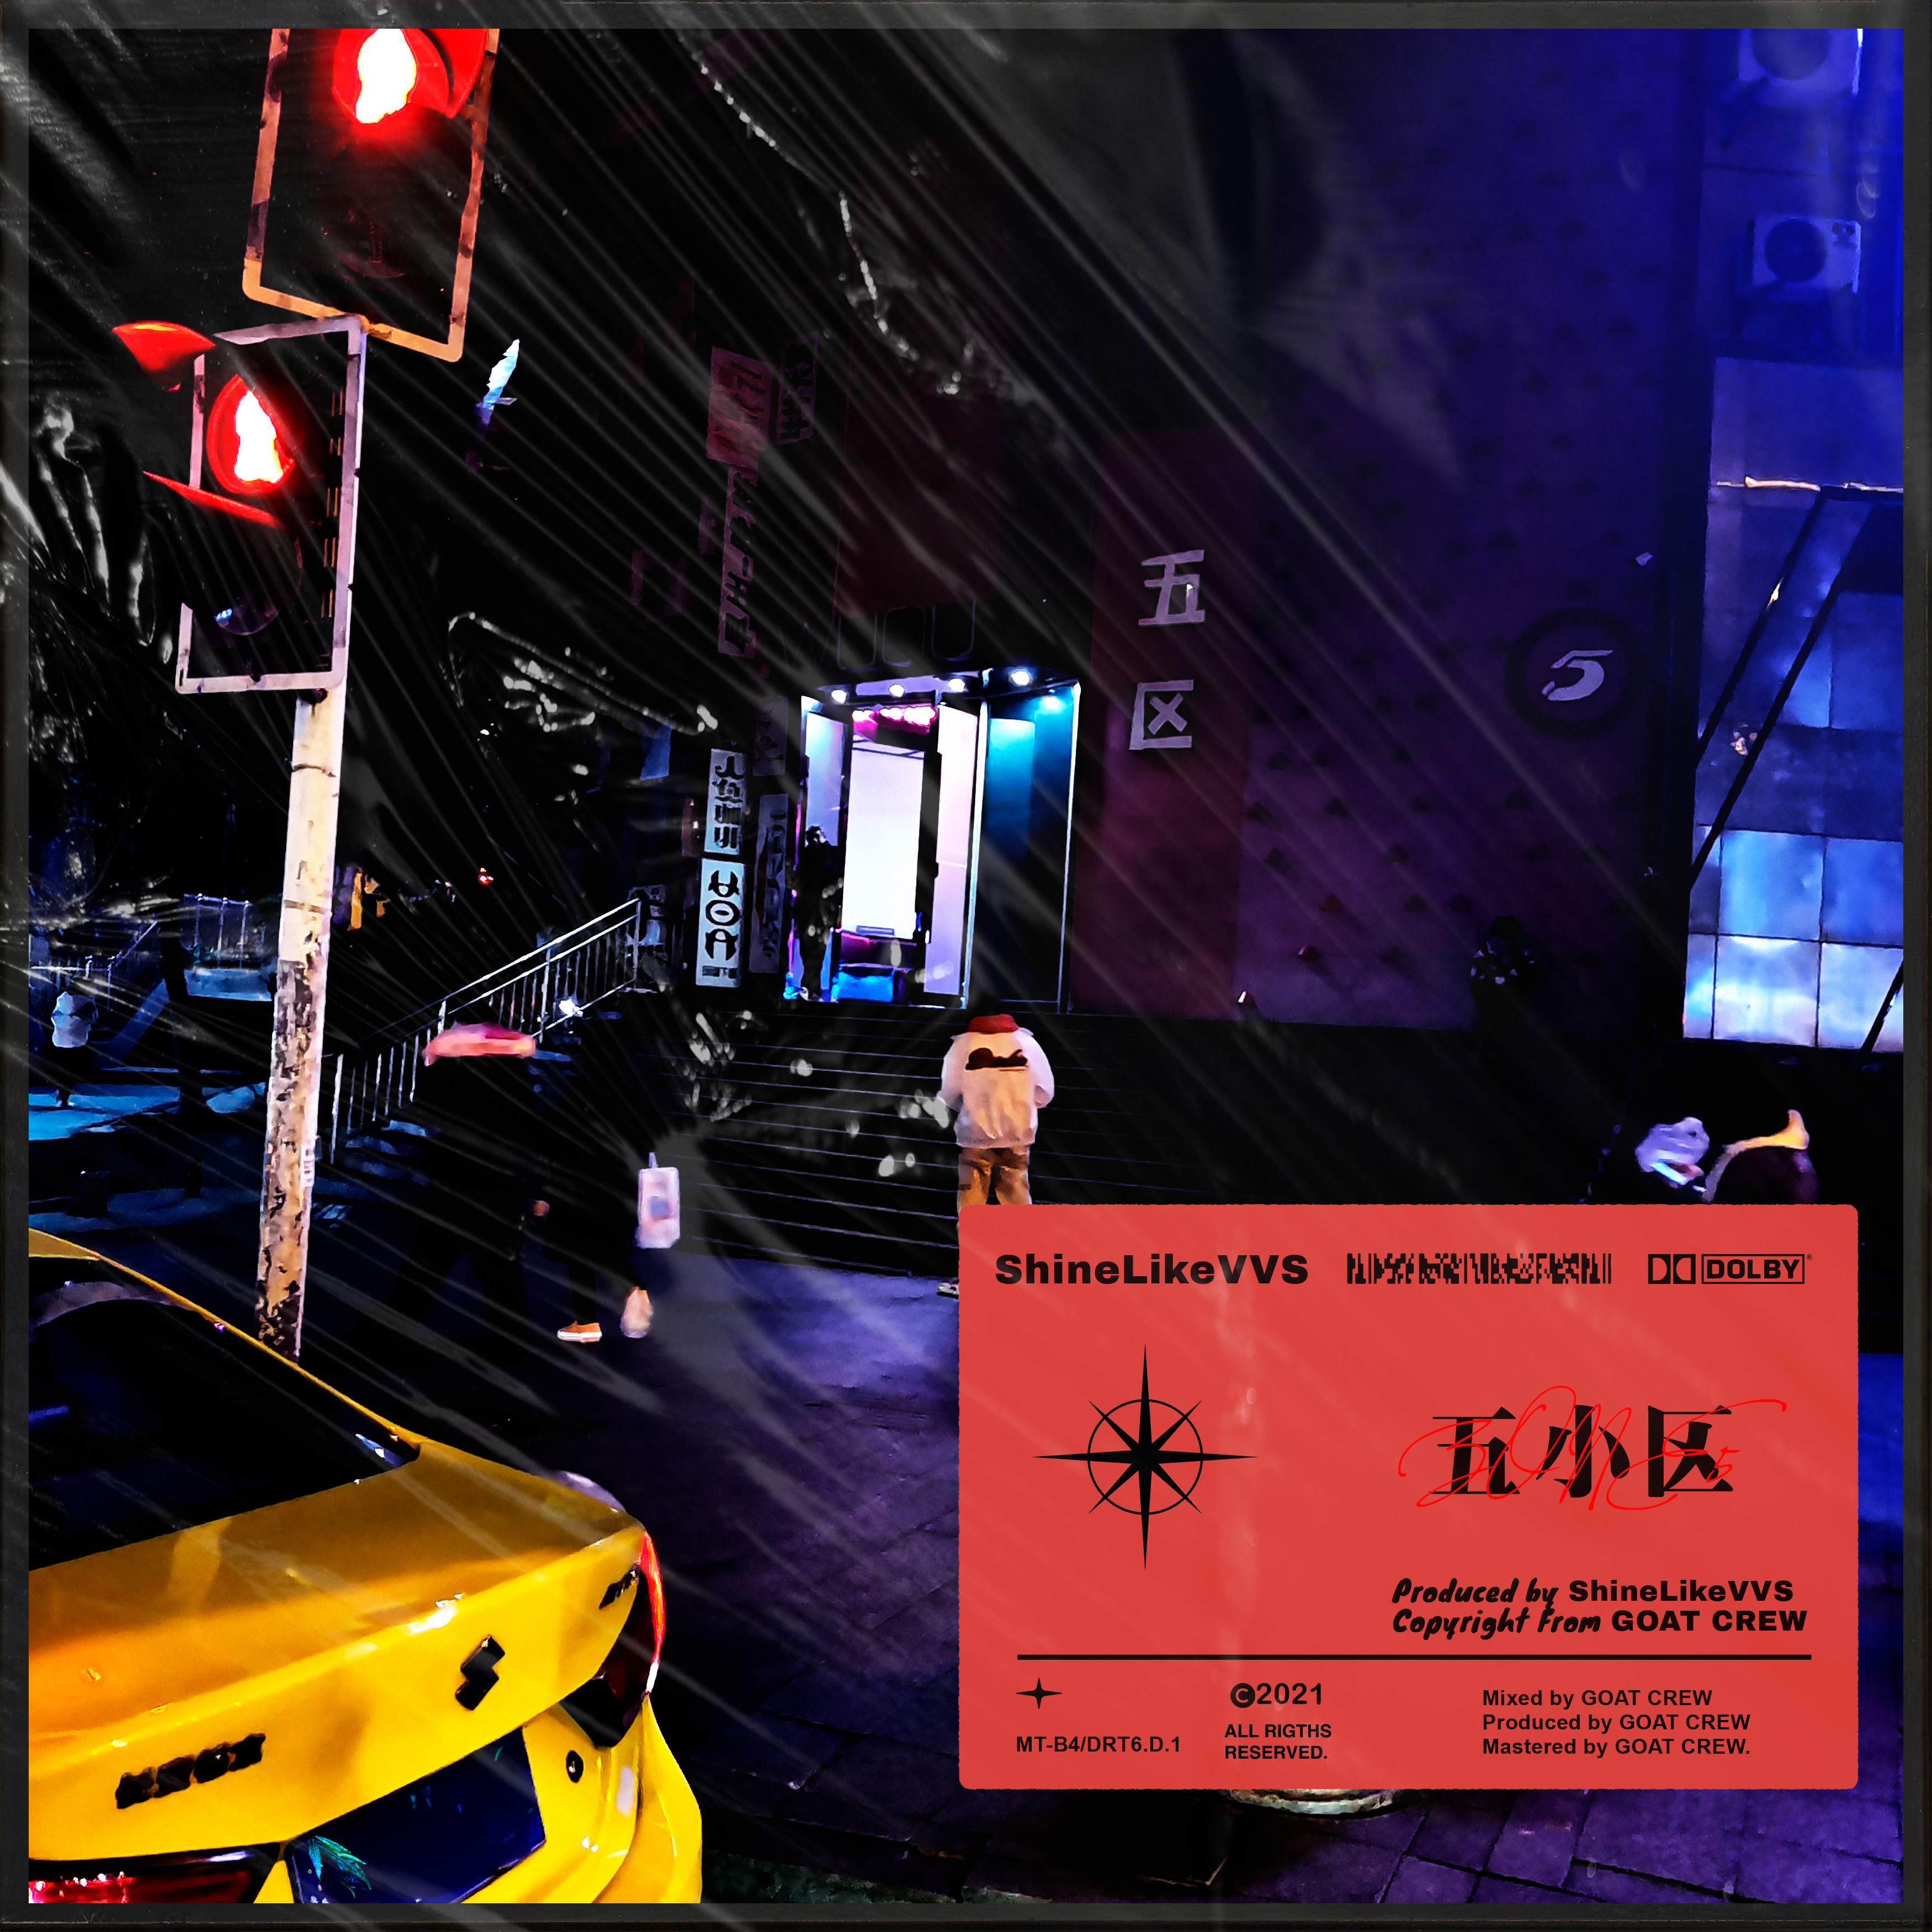 ShineLikeVVS - “五小区”A$AP Rocky Type Beat